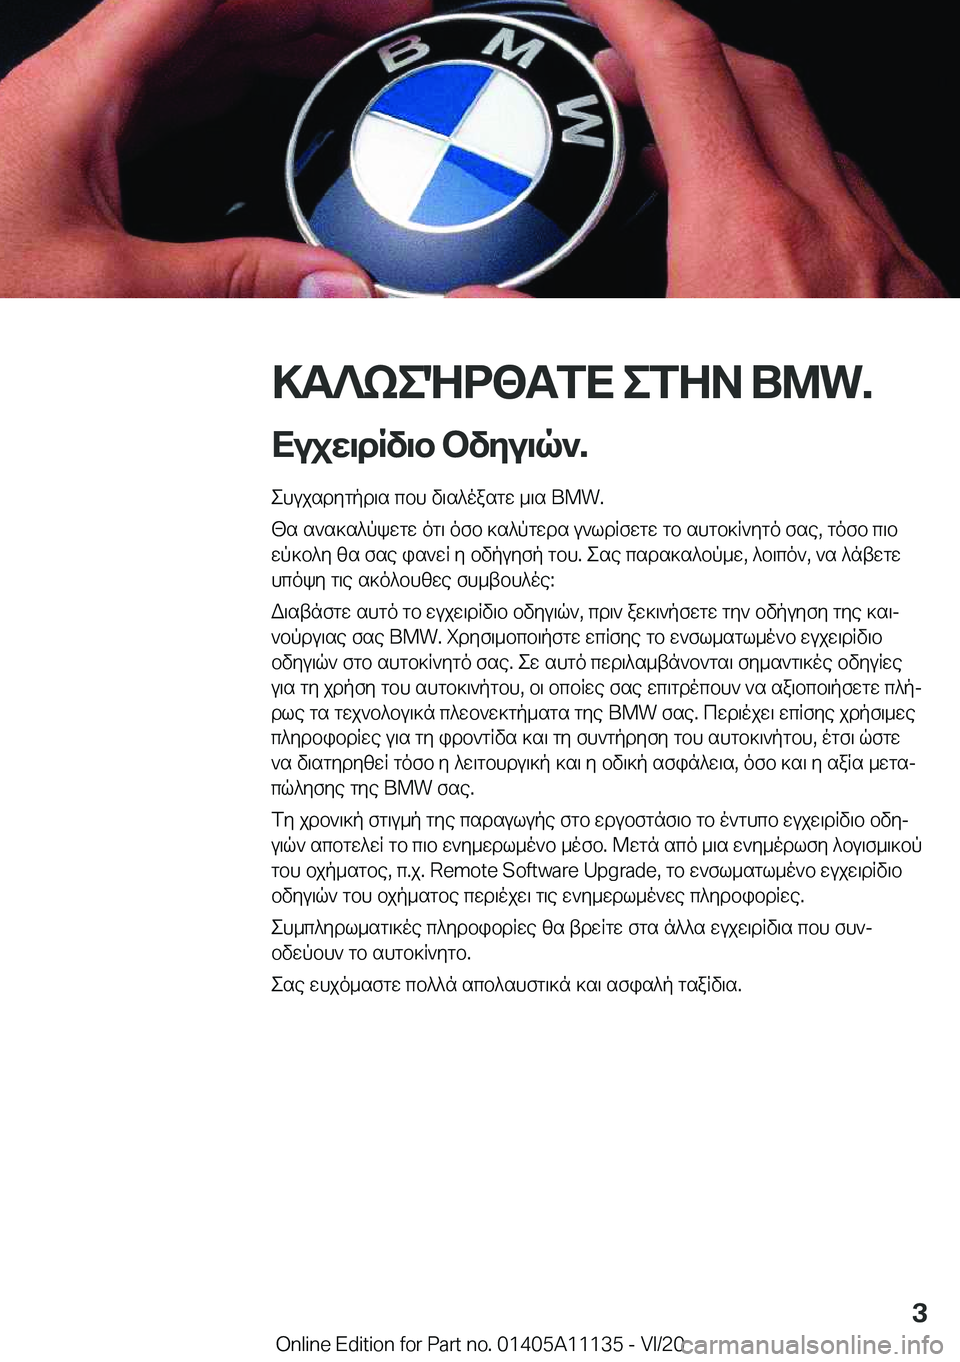 BMW 8 SERIES COUPE 2021  ΟΔΗΓΌΣ ΧΡΉΣΗΣ (in Greek) >T?keNd<TfX�efZA��B�M�W�.
Xujw\dRv\b�bvyu\q`�. ehujsdygpd\s�cbh�v\s^oasgw�_\s��B�M�W�.
[s�s`s]s^pkwgw�og\�ofb�